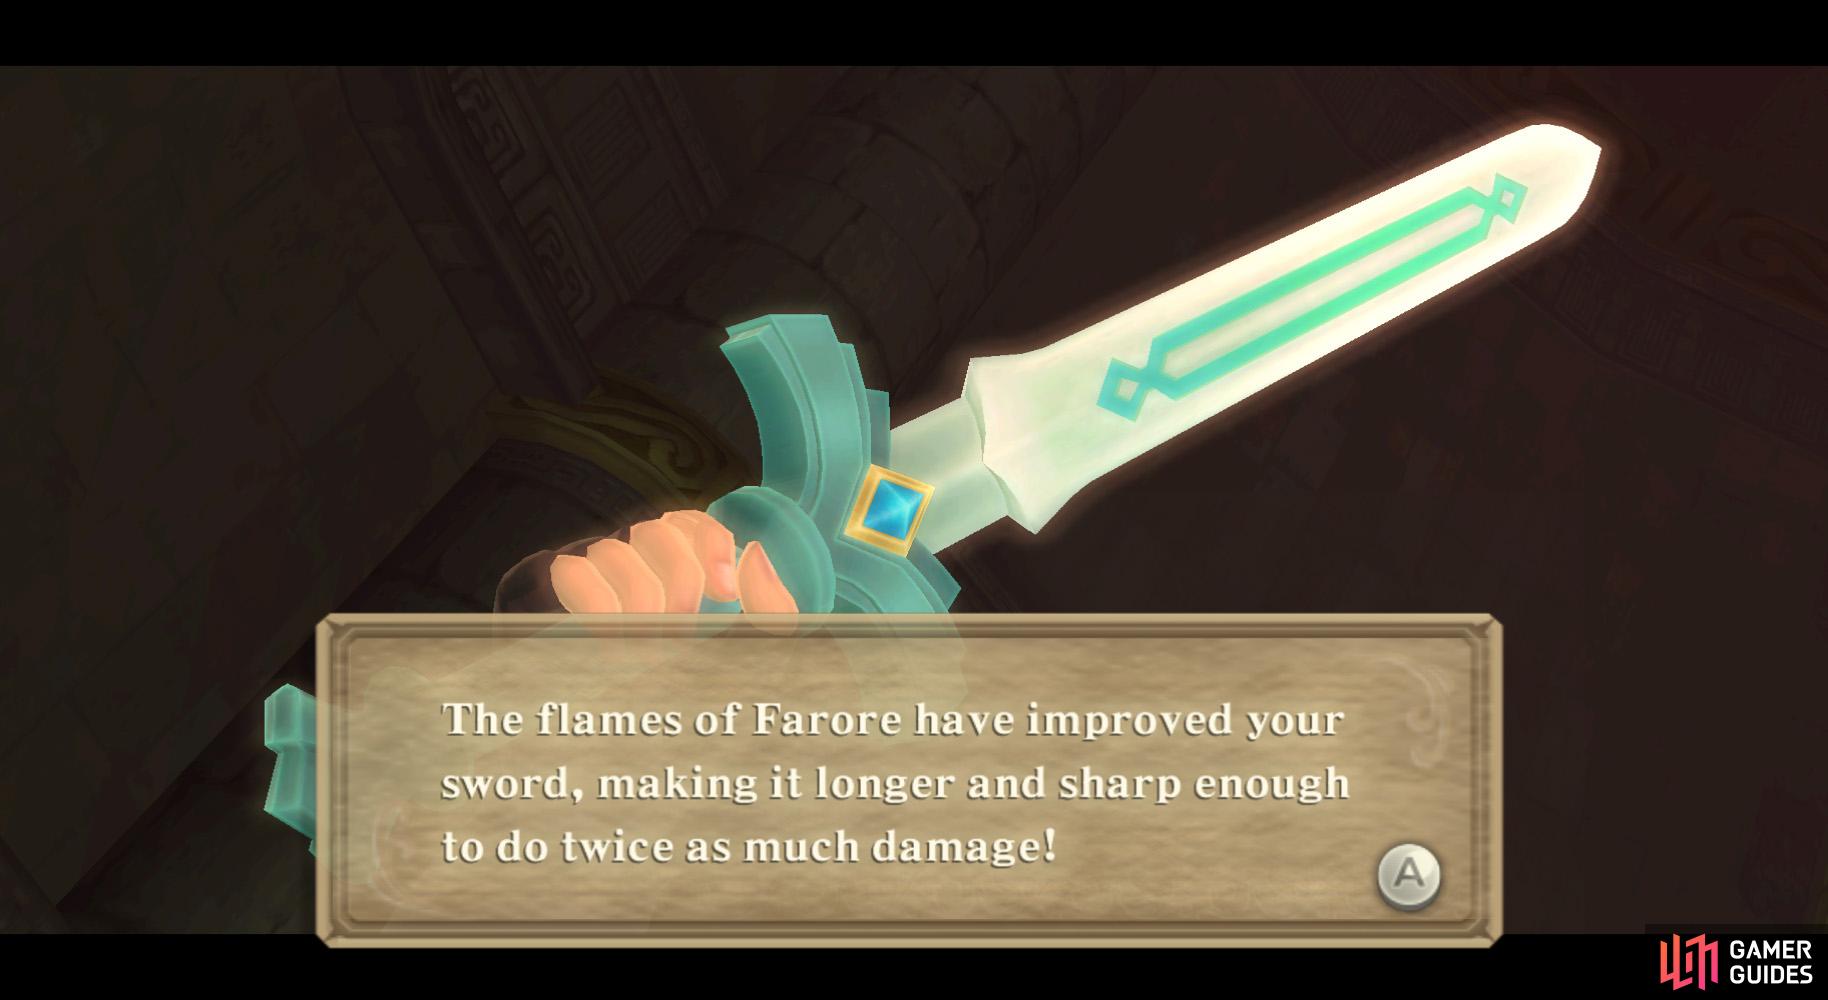 What's better than a sword? A long sword!